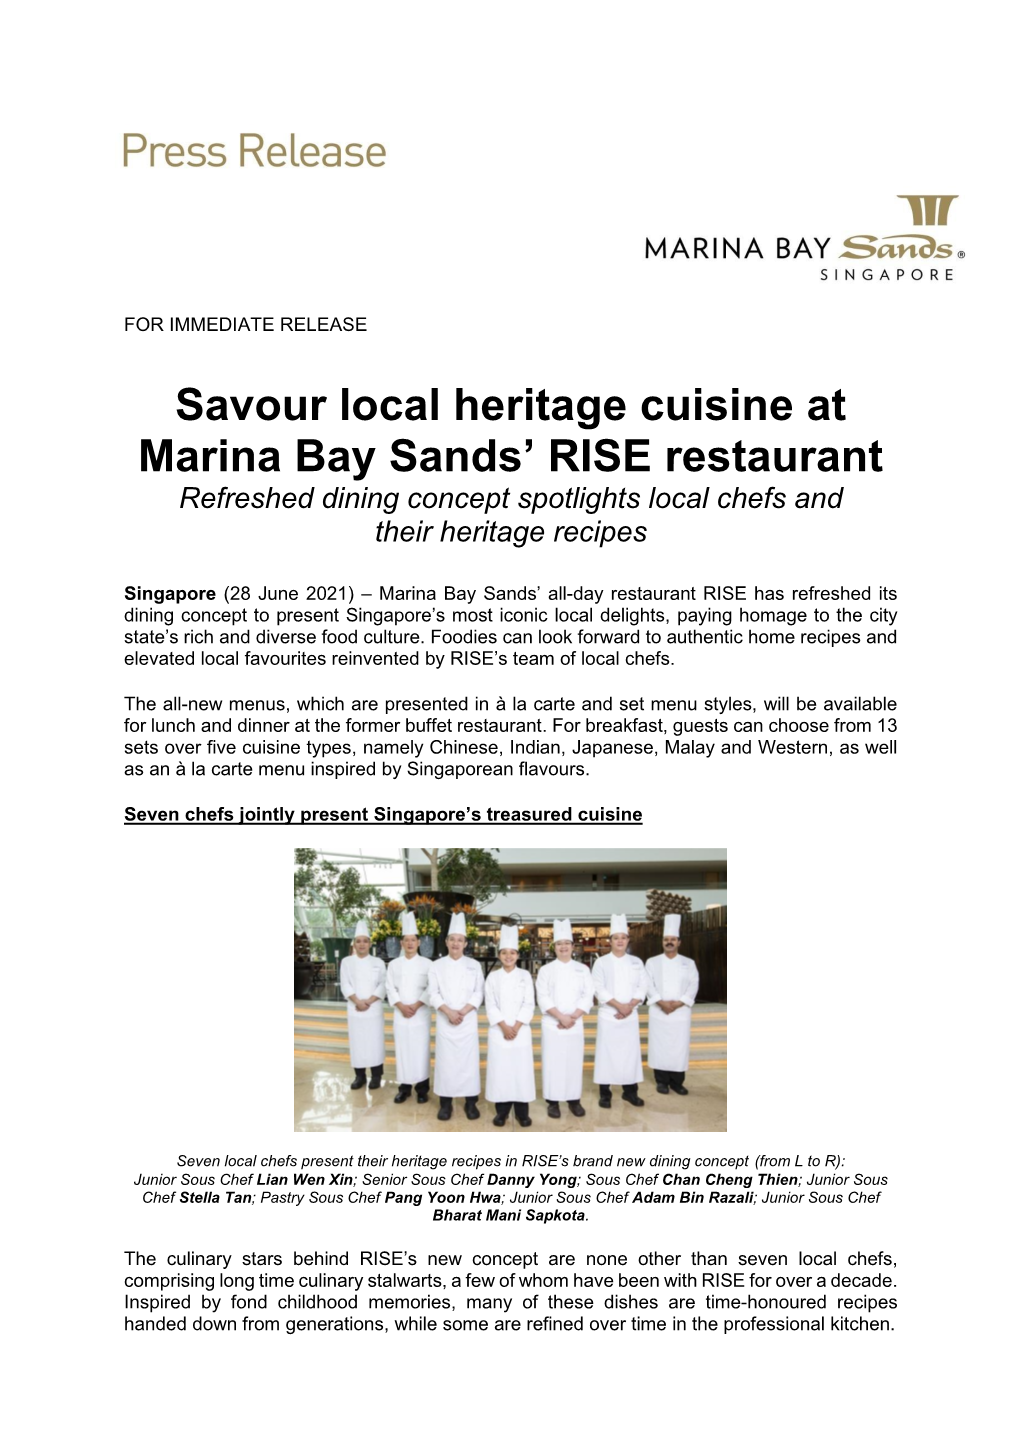 Savour Local Heritage Cuisine at Marina Bay Sands' RISE Restaurant